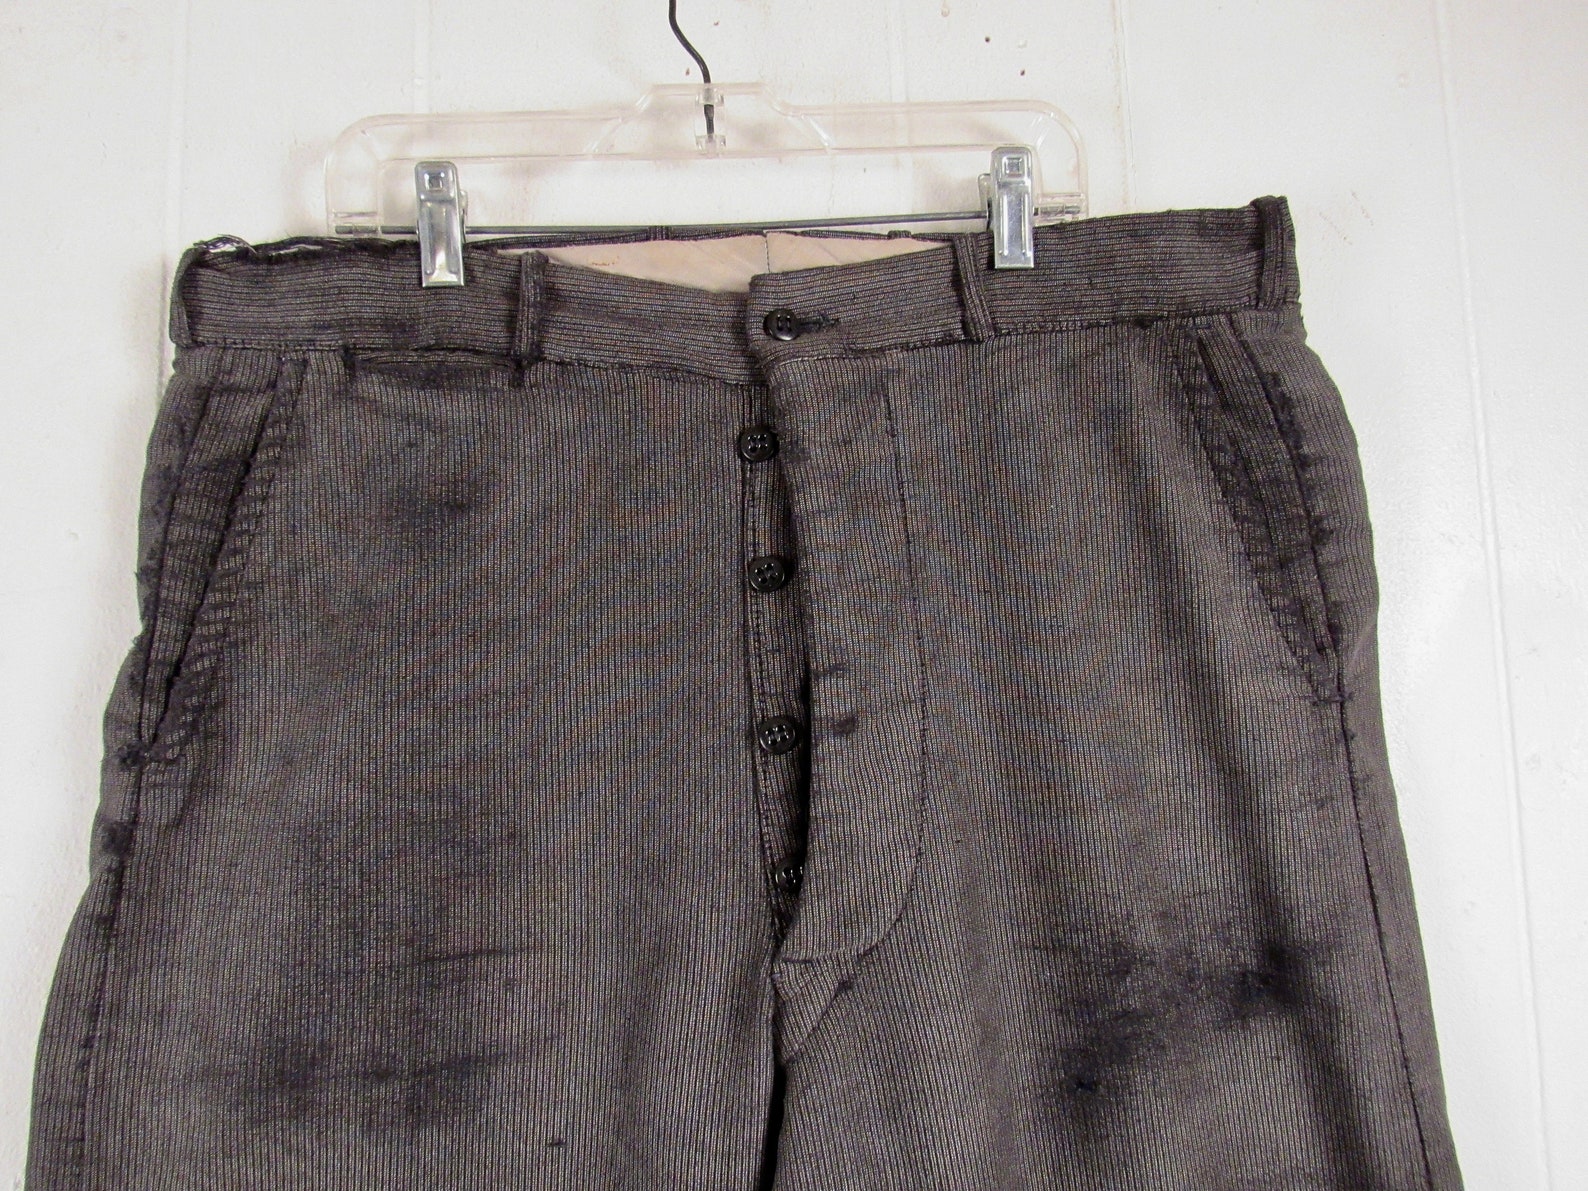 Vintage Pants 1930s Work Pants Moleskin Pants Cline Fabrics - Etsy